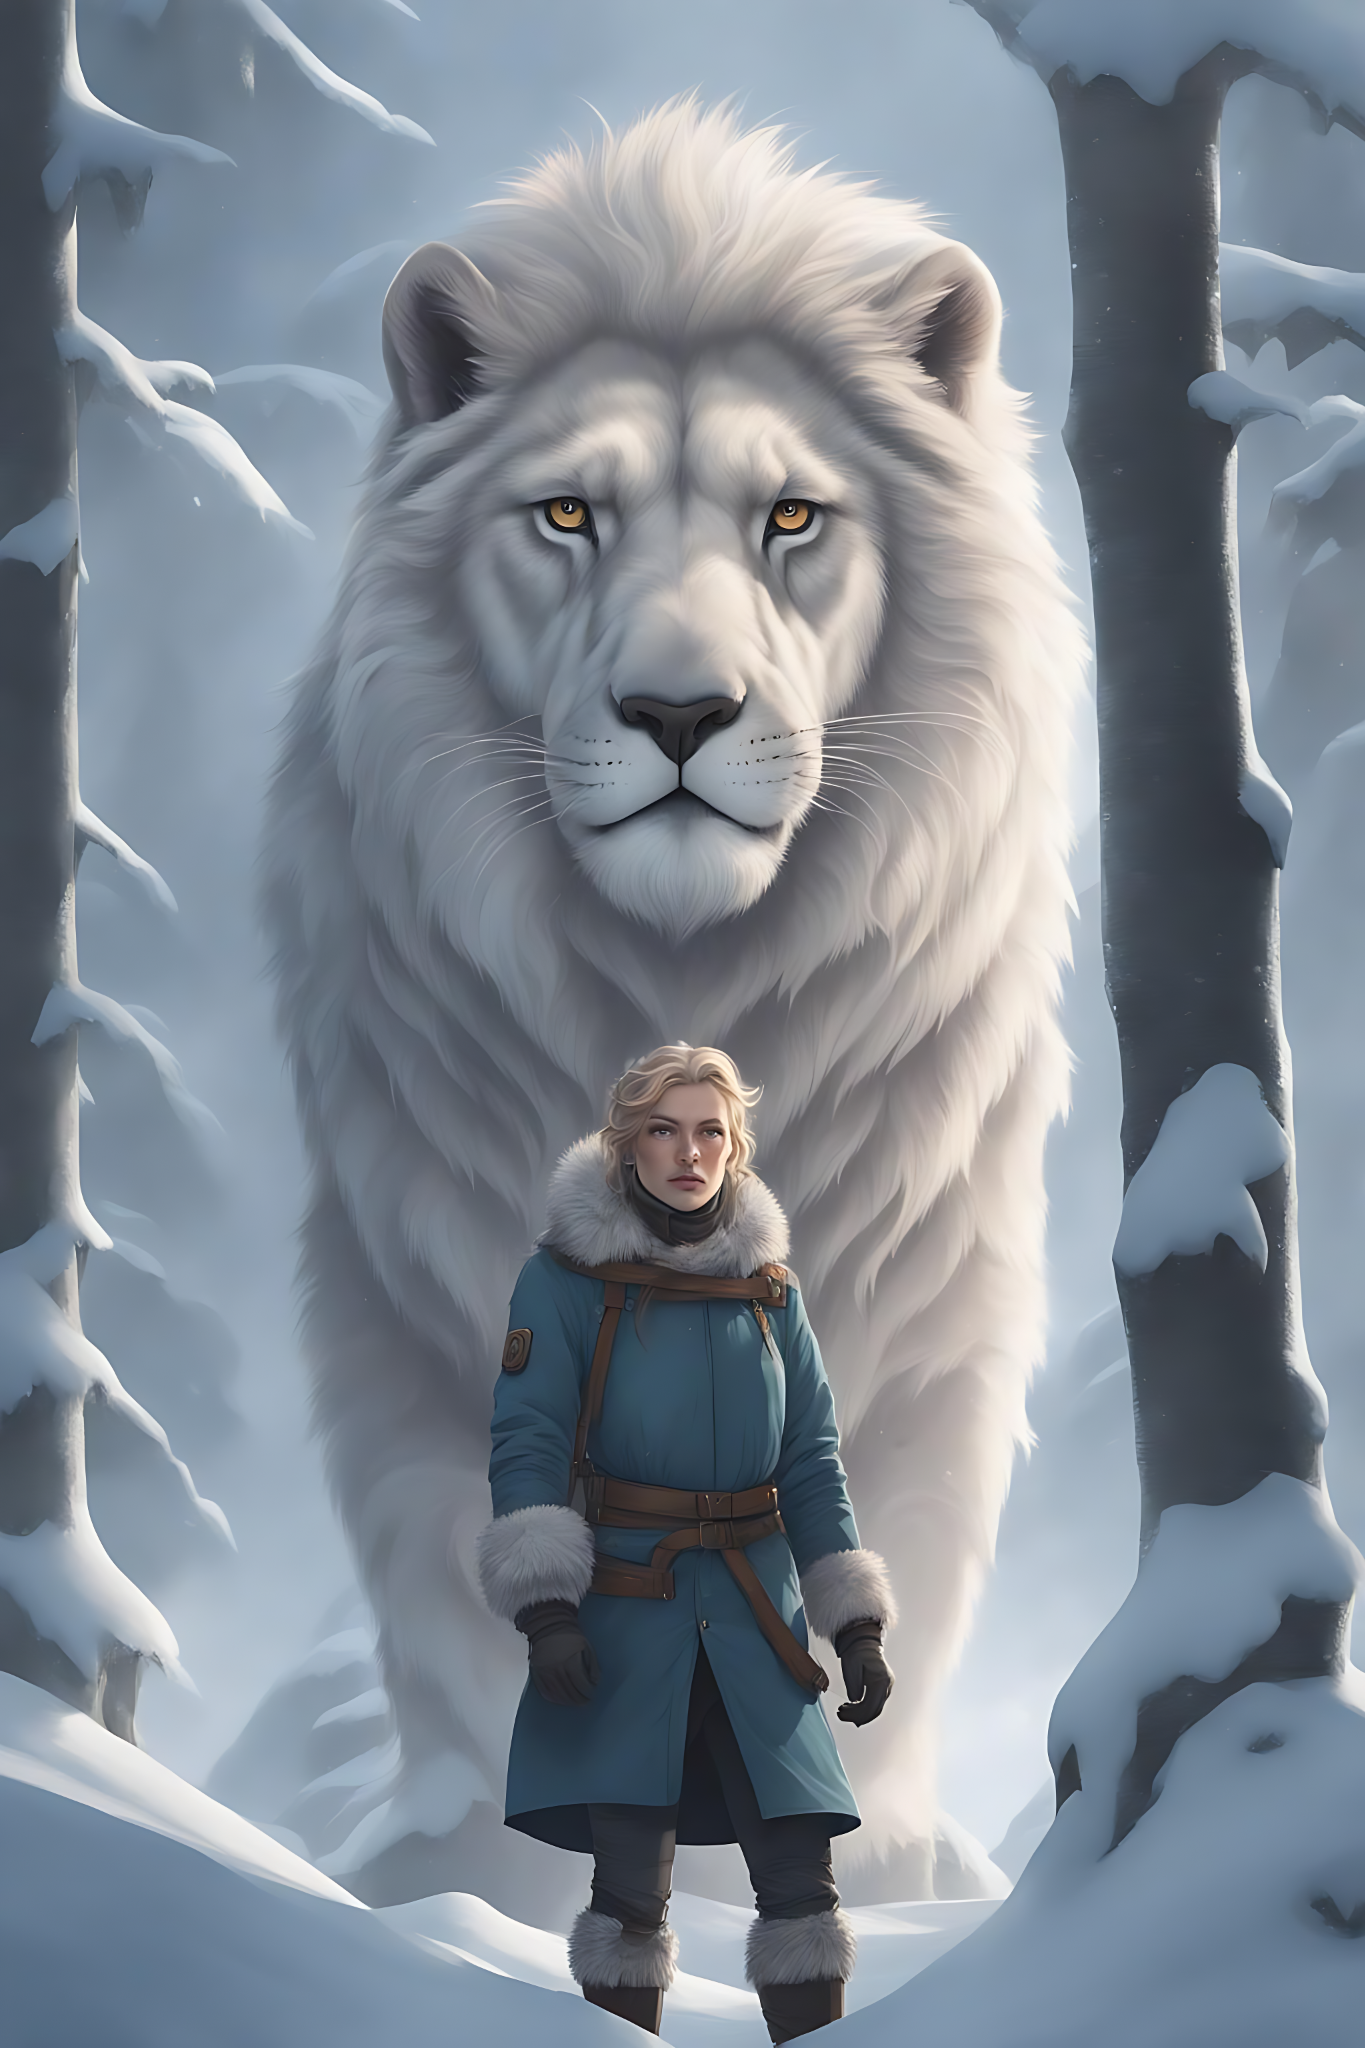 AI Snow Lion 2 - Henri Huotari द्वारा निर्मित paint के साथ